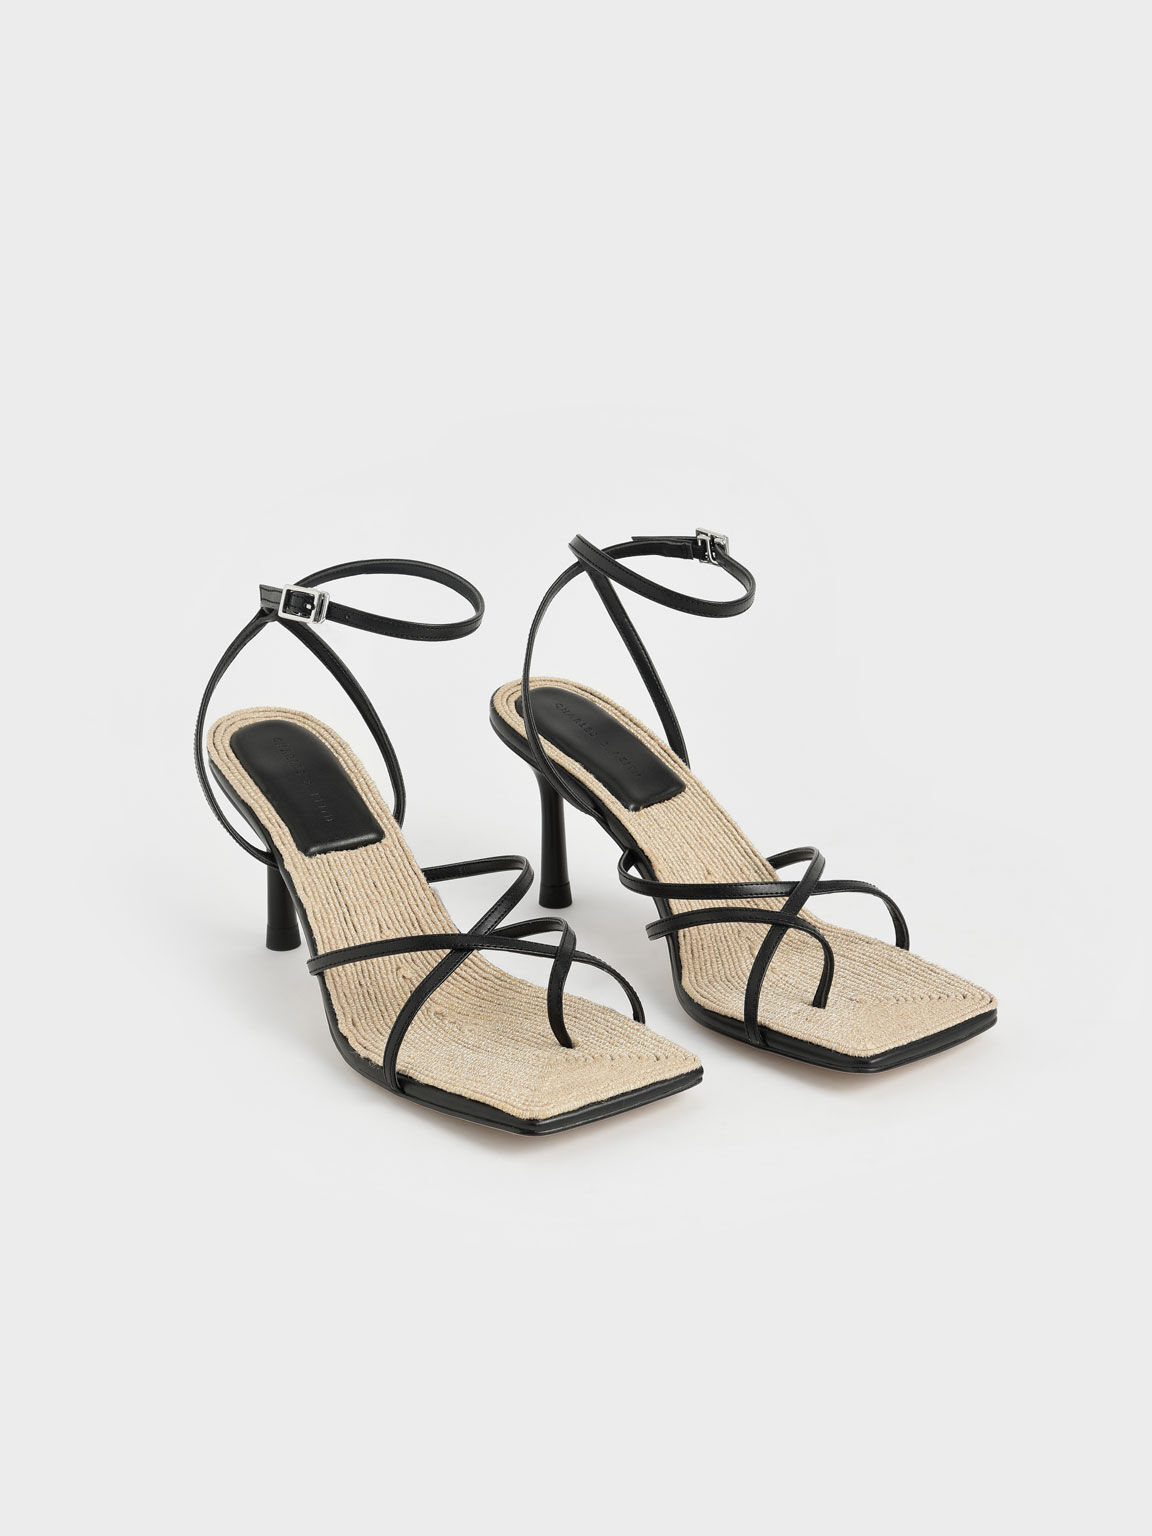 Black Ankle Strap Stiletto Sandals - CHARLES & KEITH SG